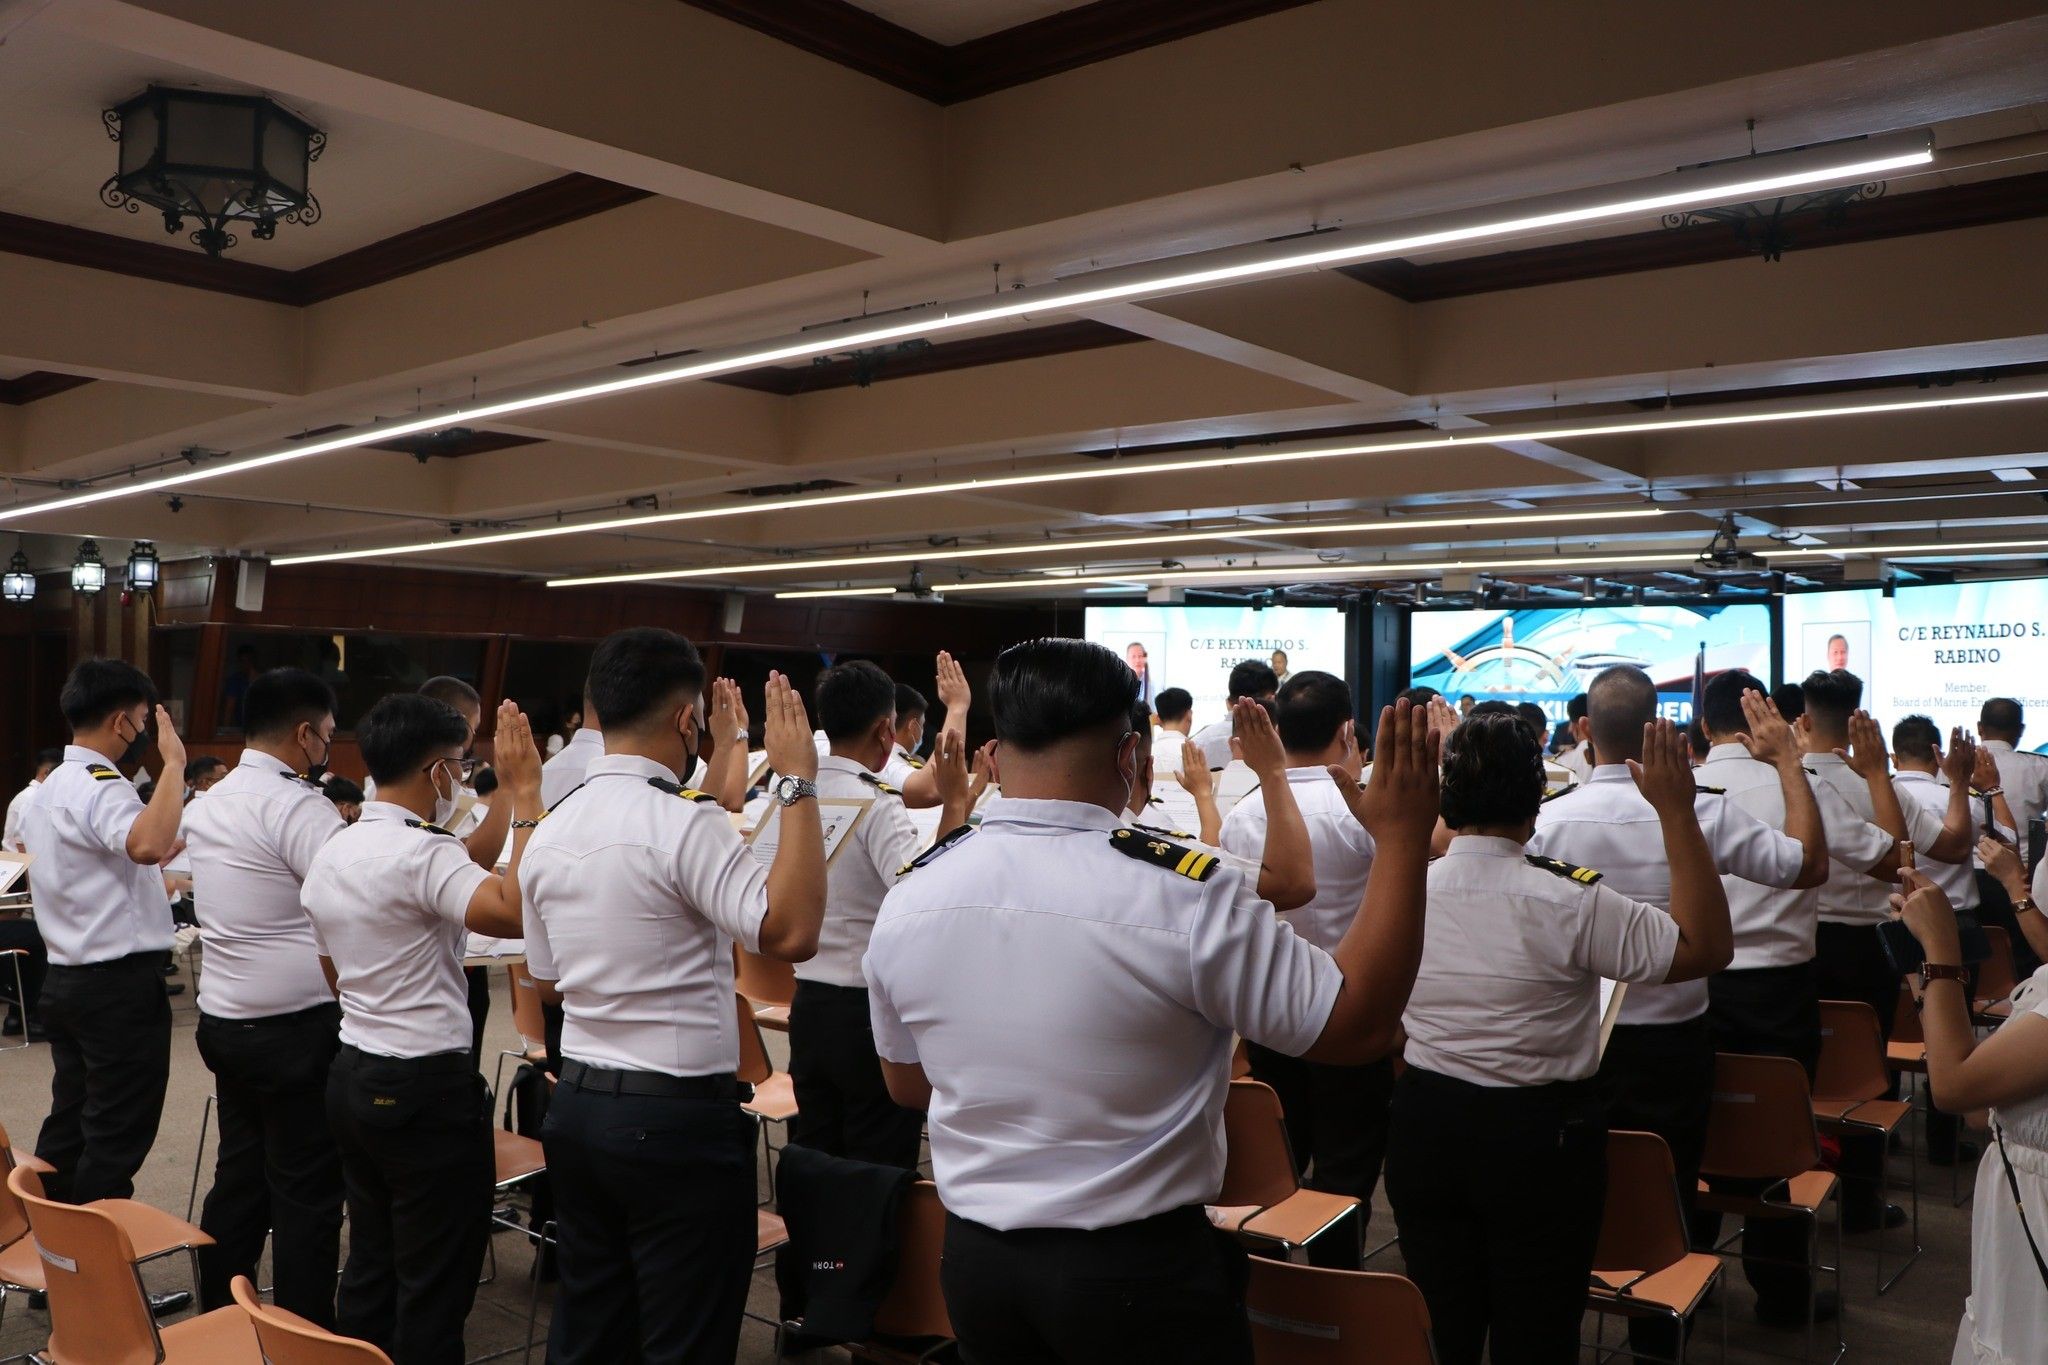 News from home: Filipino seafarers can still serve on EU vessels, shorter nursing programs